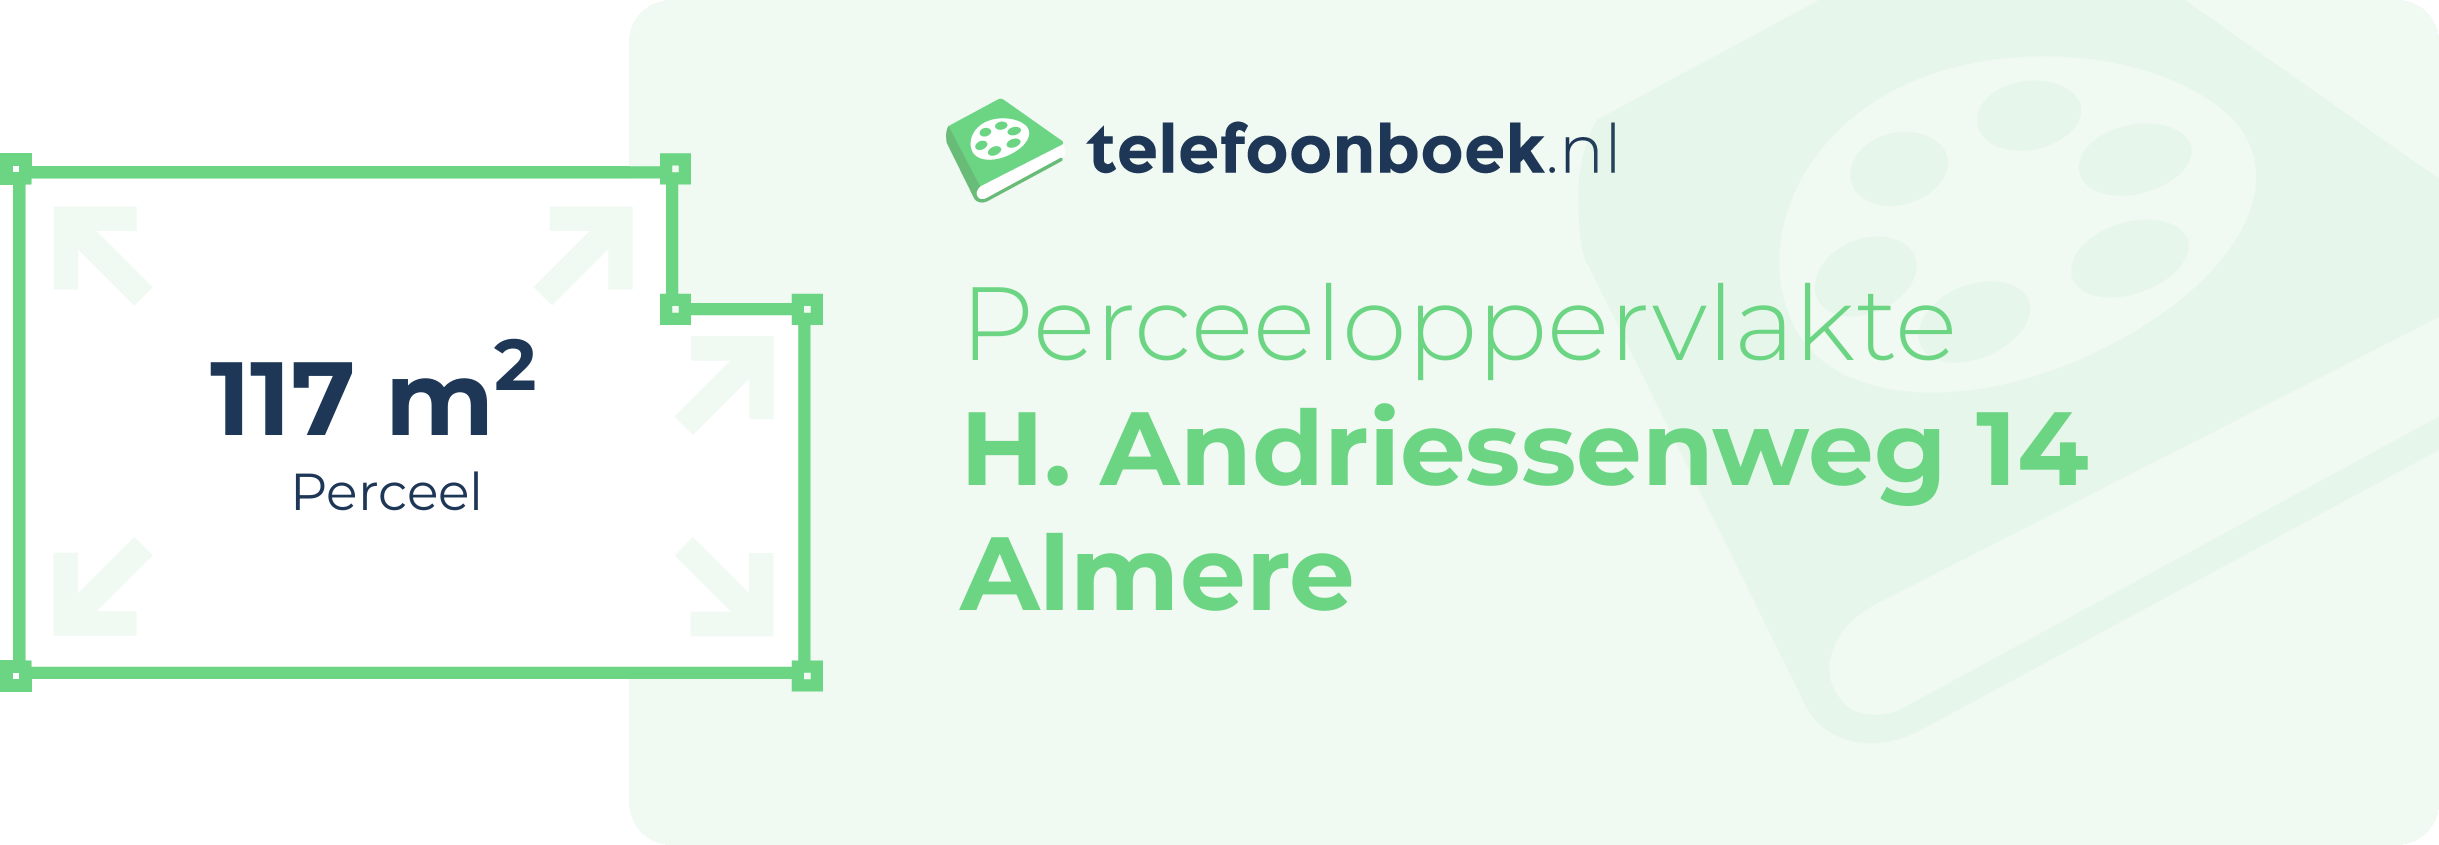 Perceeloppervlakte H. Andriessenweg 14 Almere